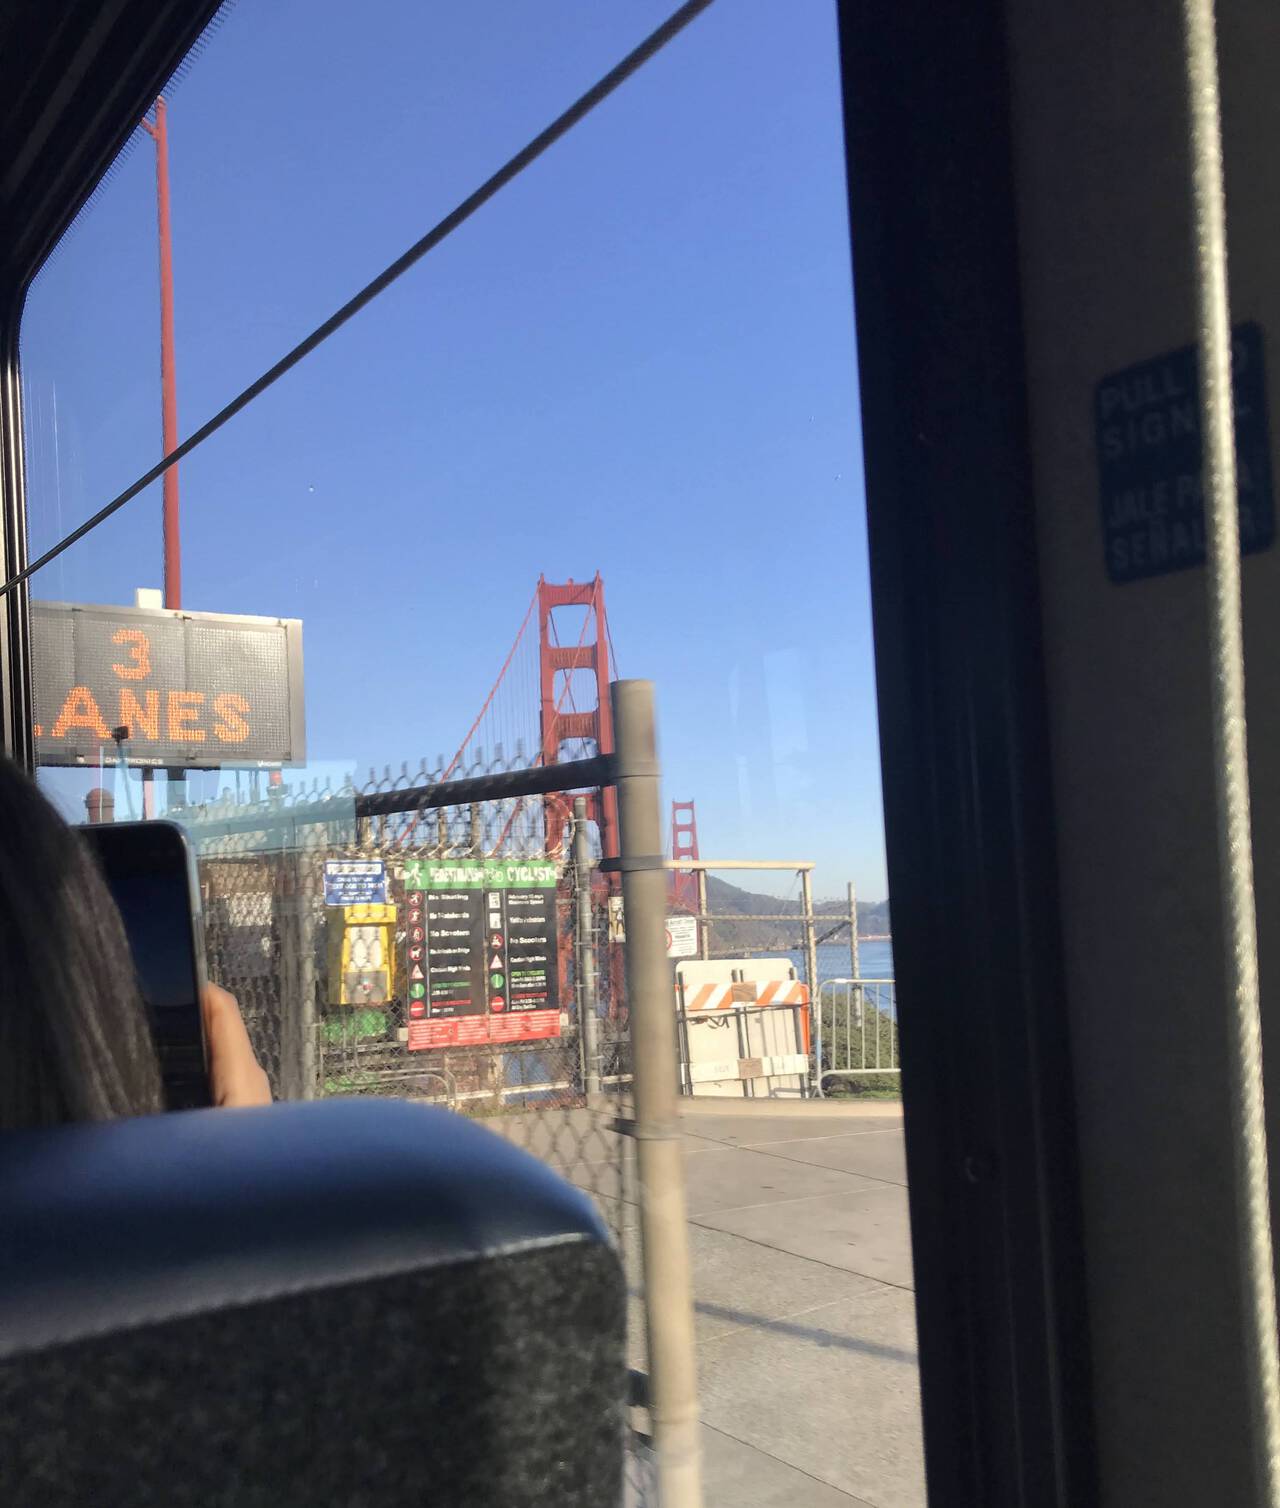 Obligatory Golden Gate Bridge shot